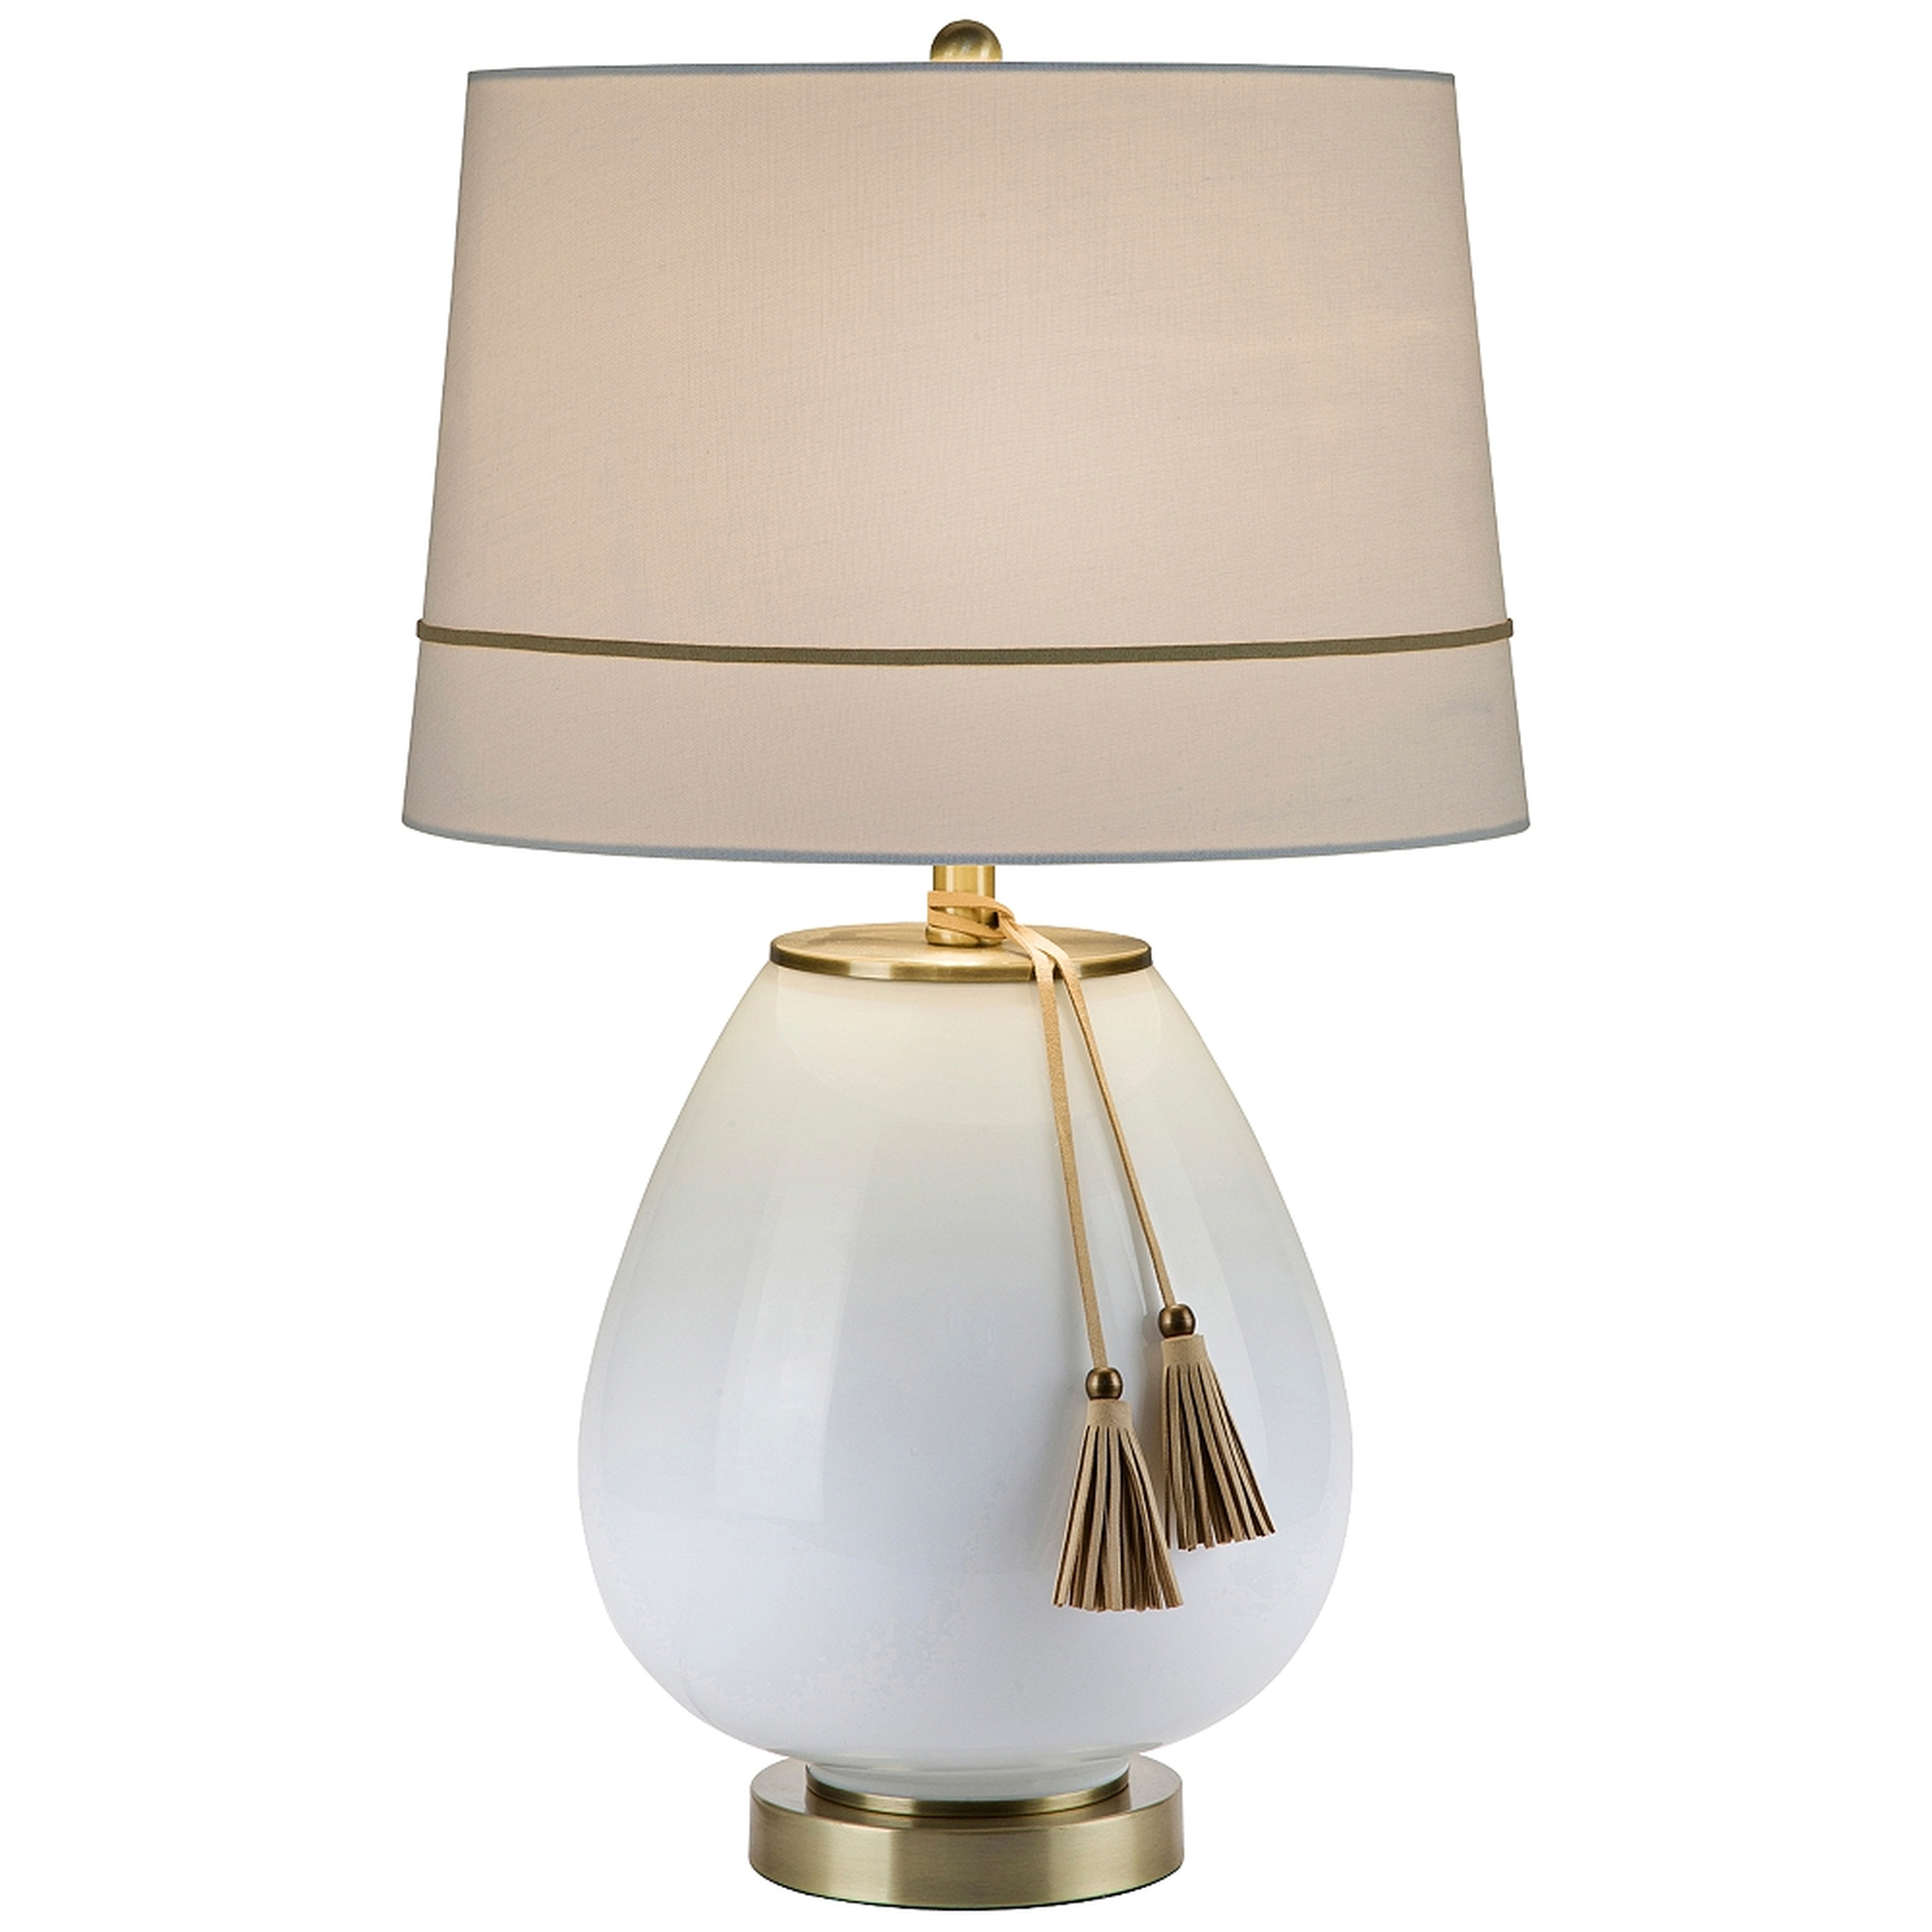 Carey White Milk Glass & Antique Brass Table Lamp  - Lamps Plus